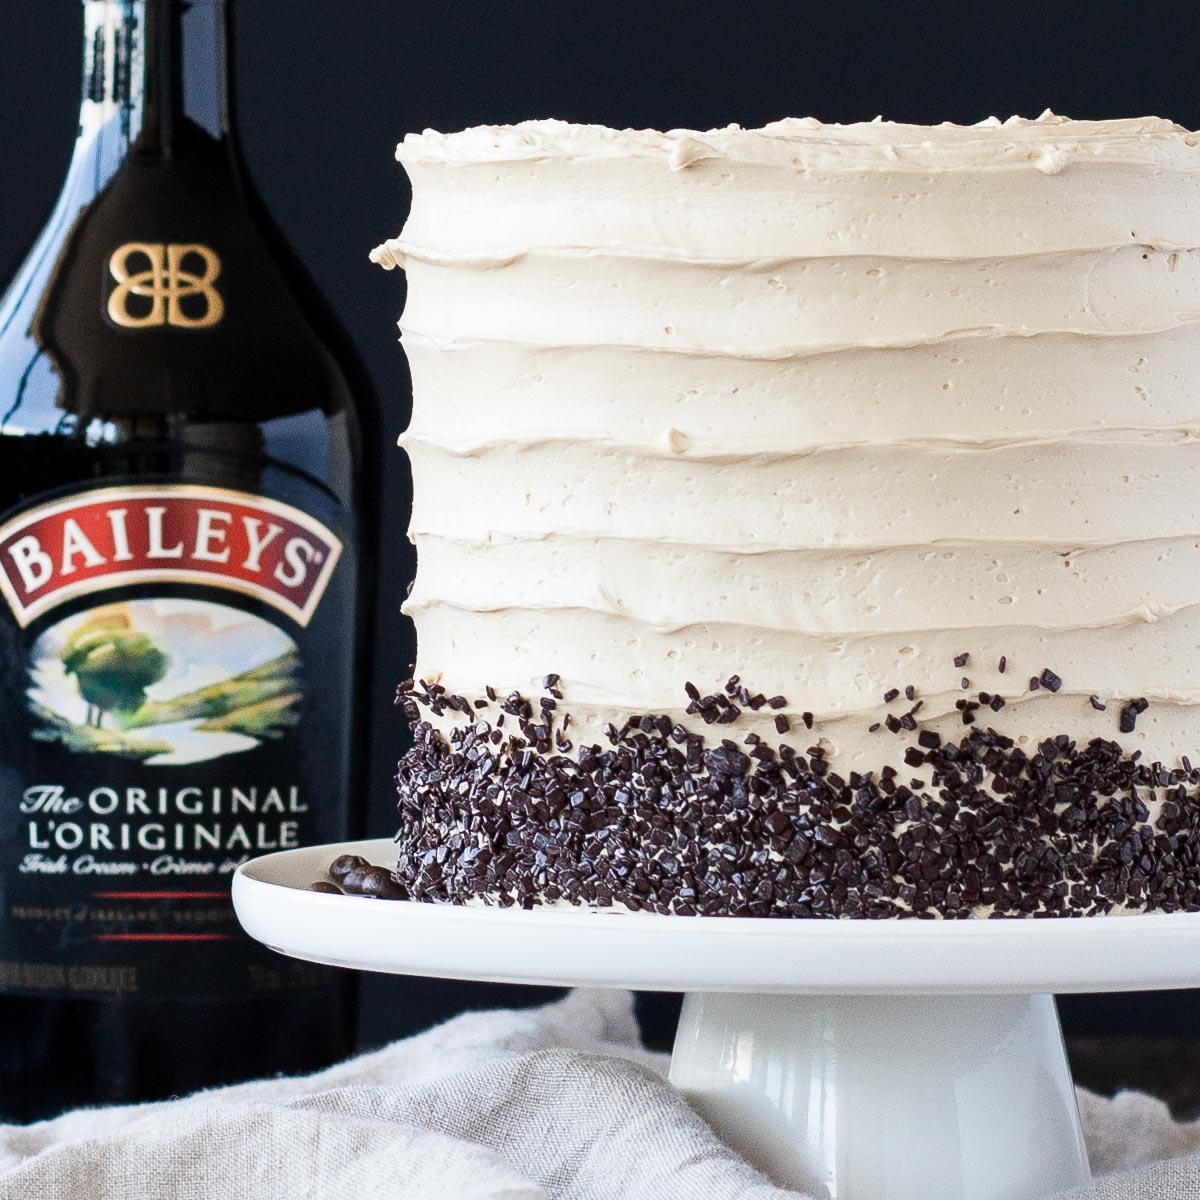 15 Baileys Irish Cream Dessert Recipes — Sugar & Cloth